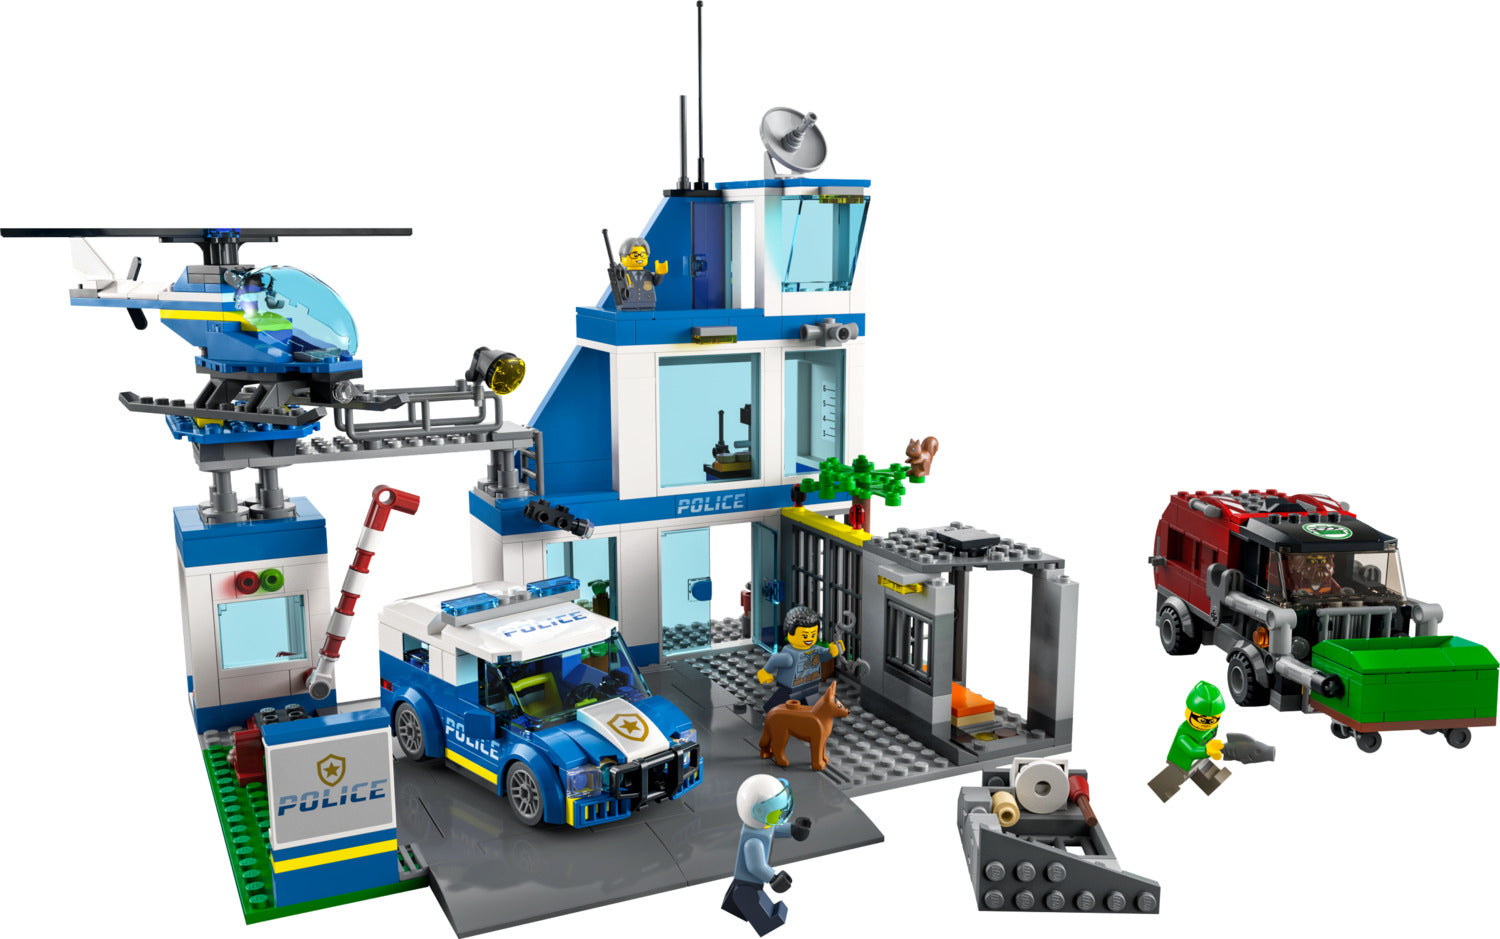 LEGO City: Police Station